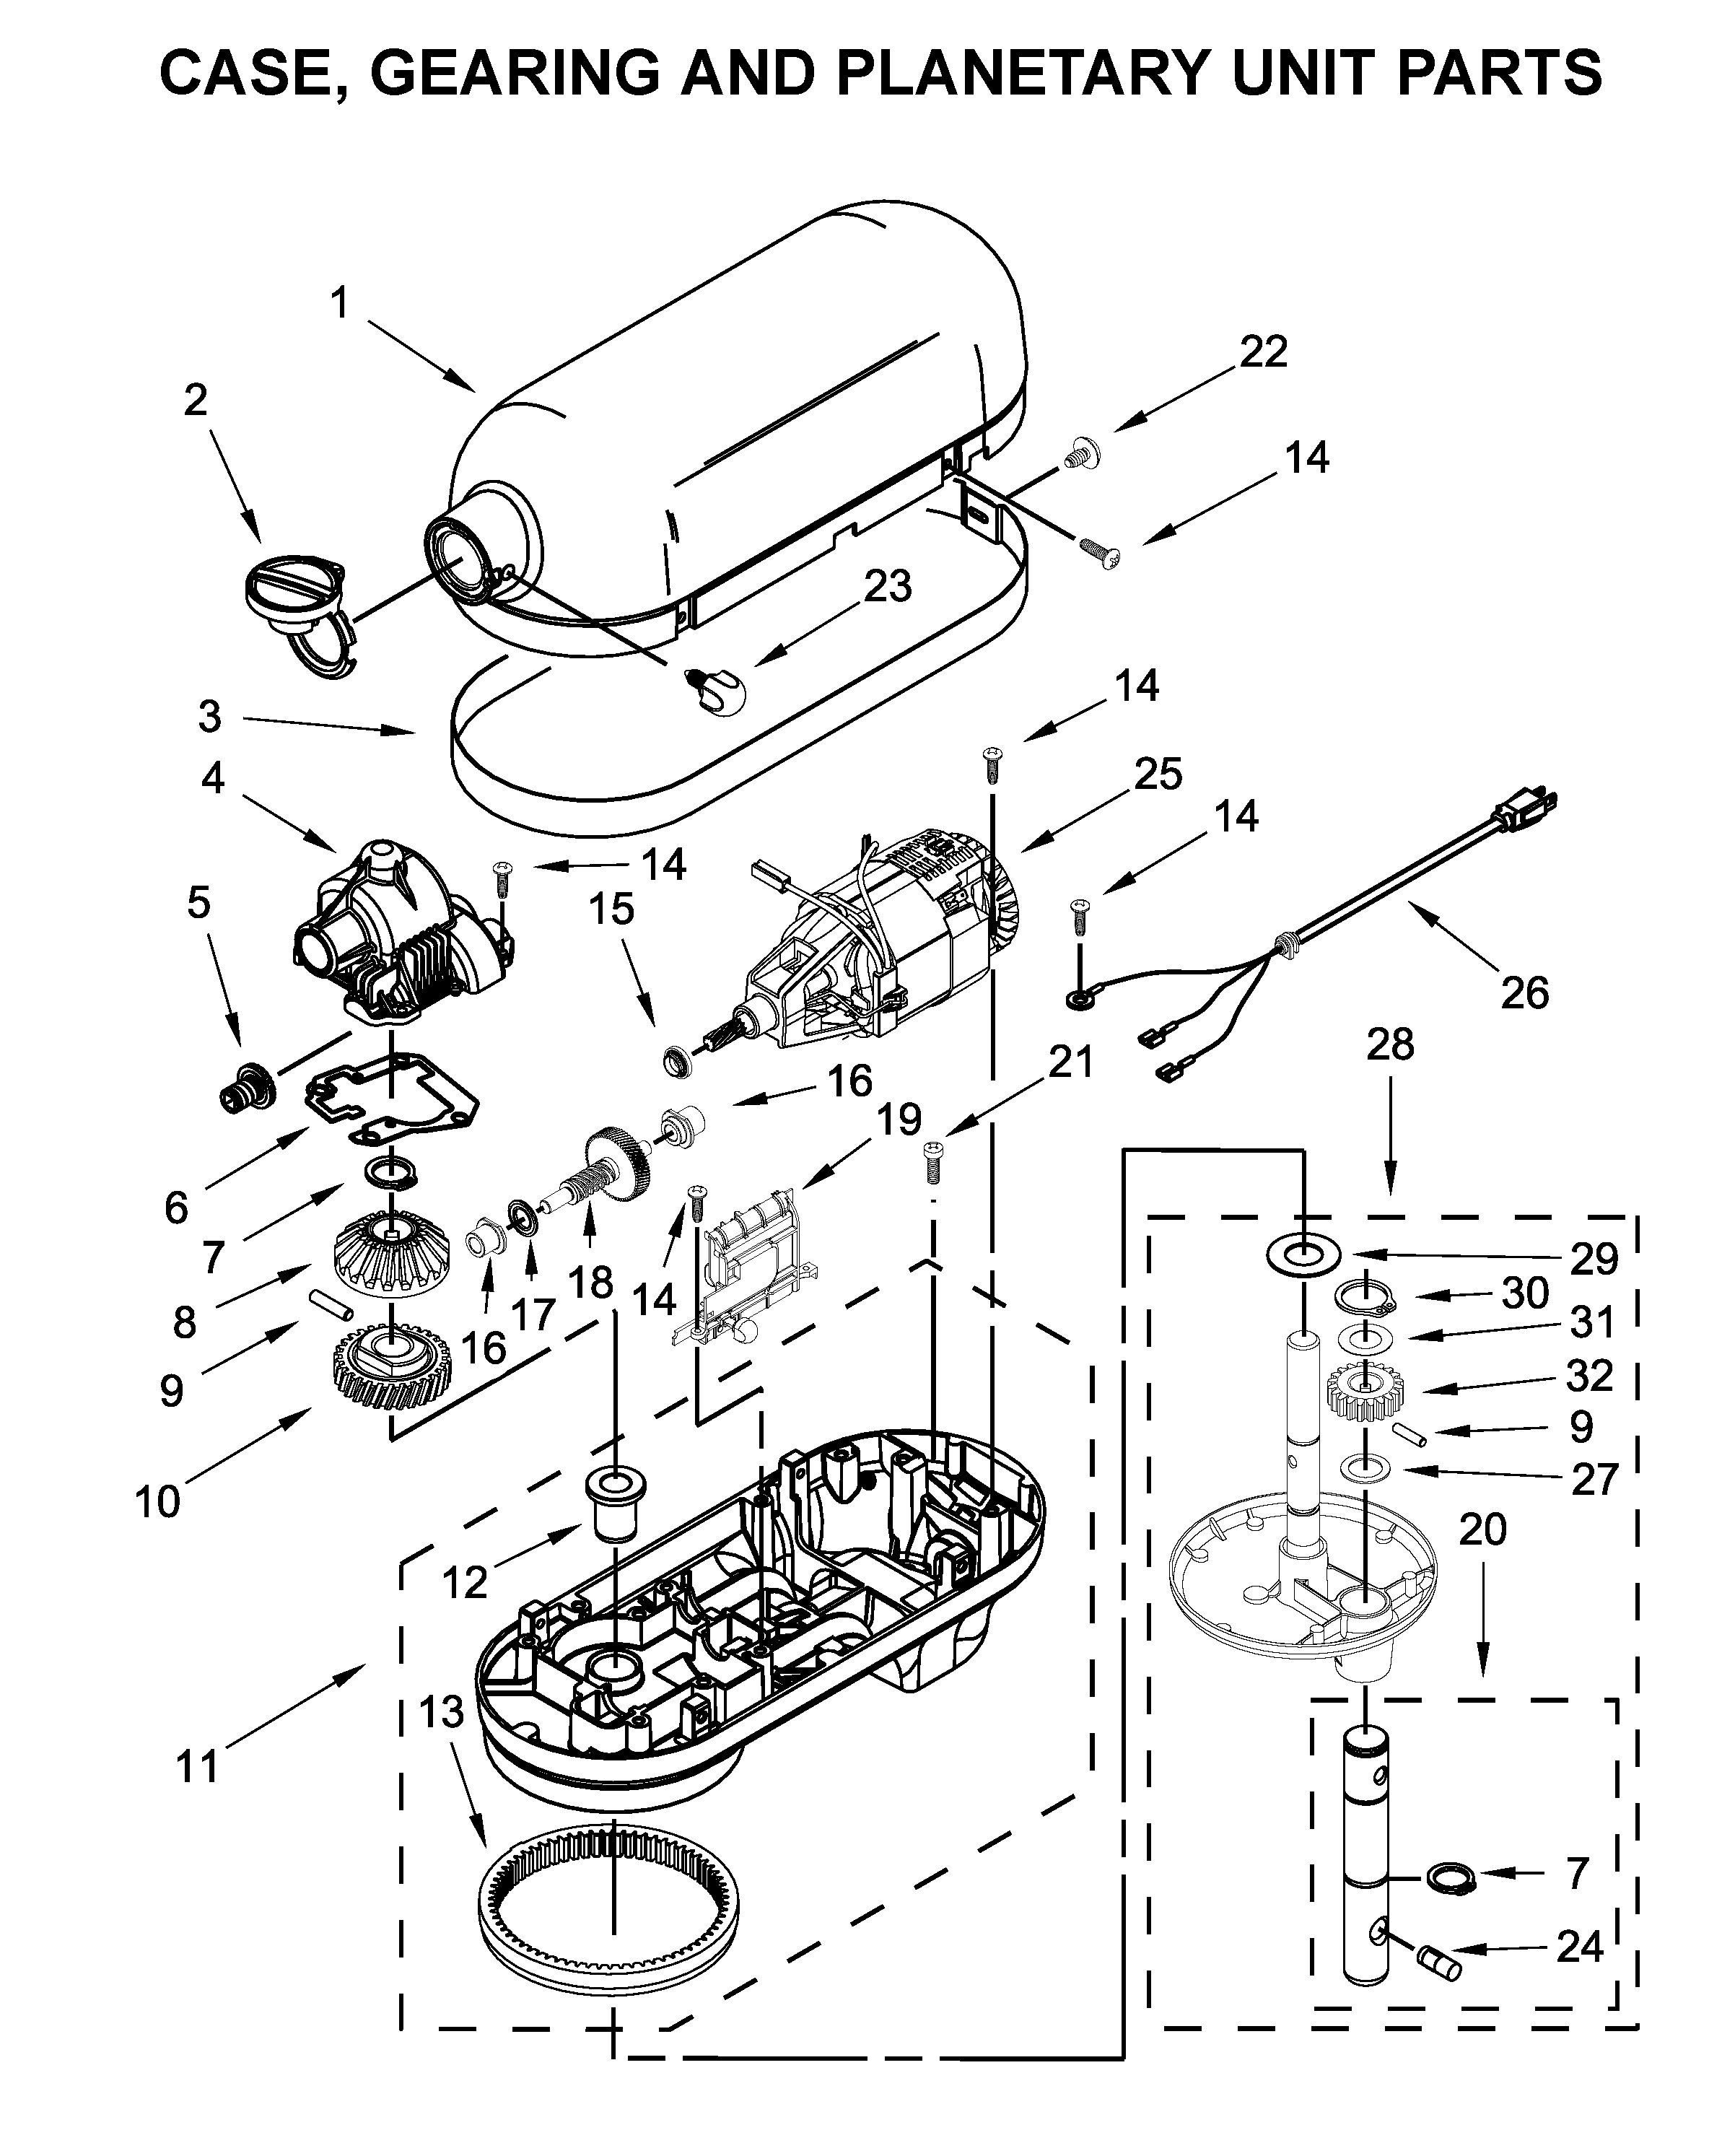 Kitchenaid mixer repair manual pdf